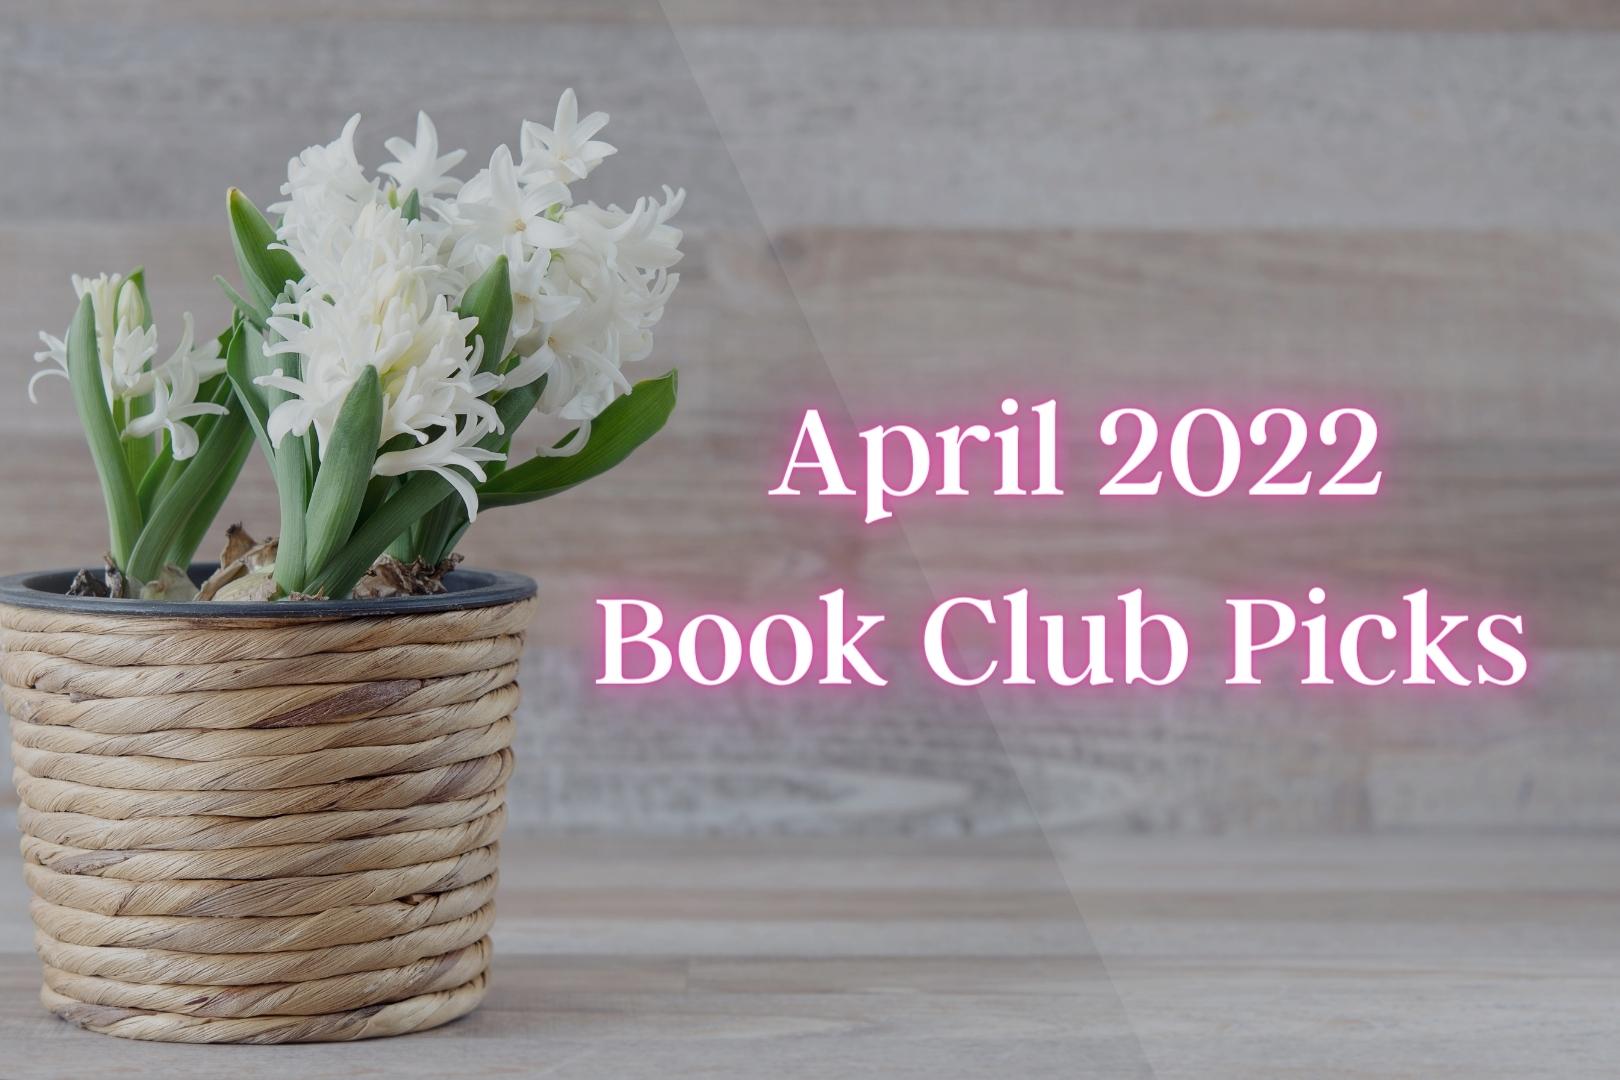 Book Club Picks for April 2022